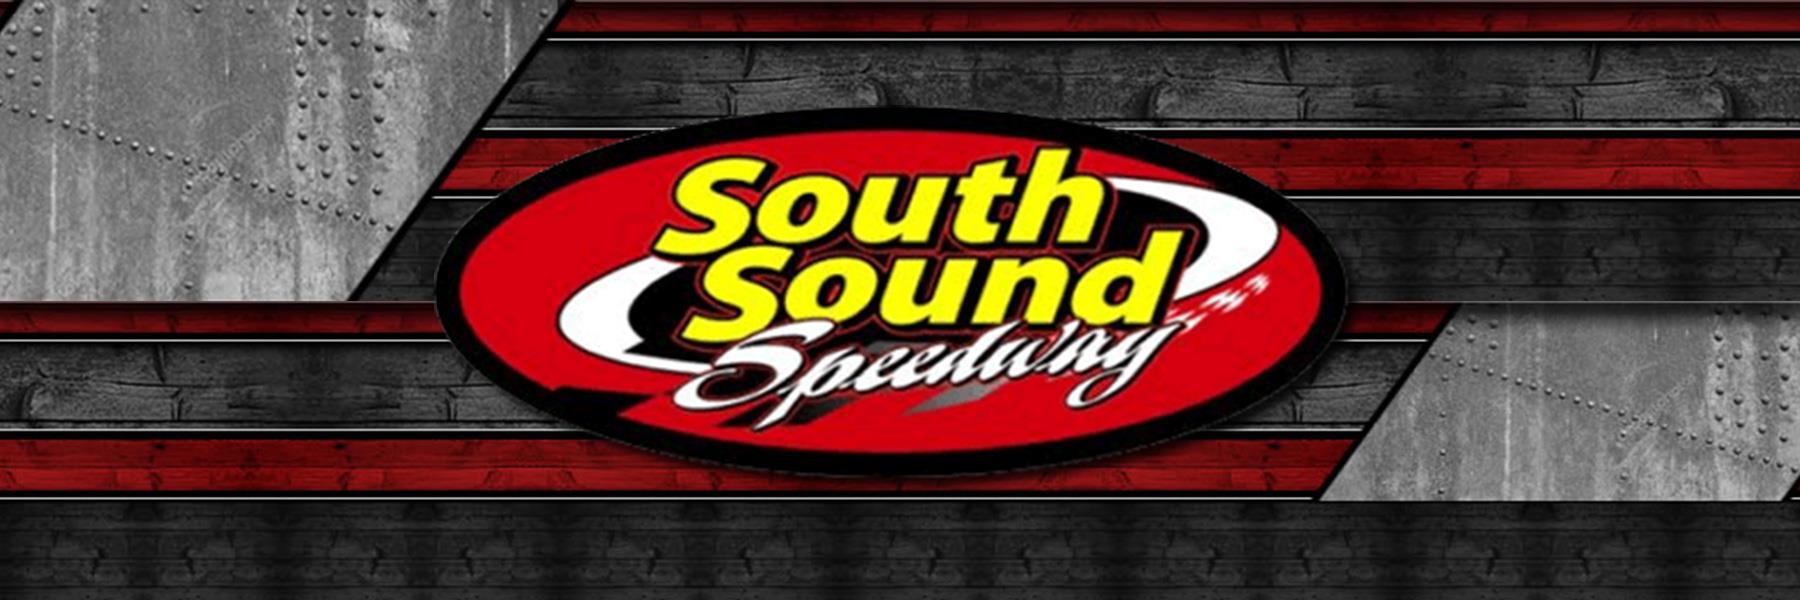 7/10/2021 - South Sound Speedway